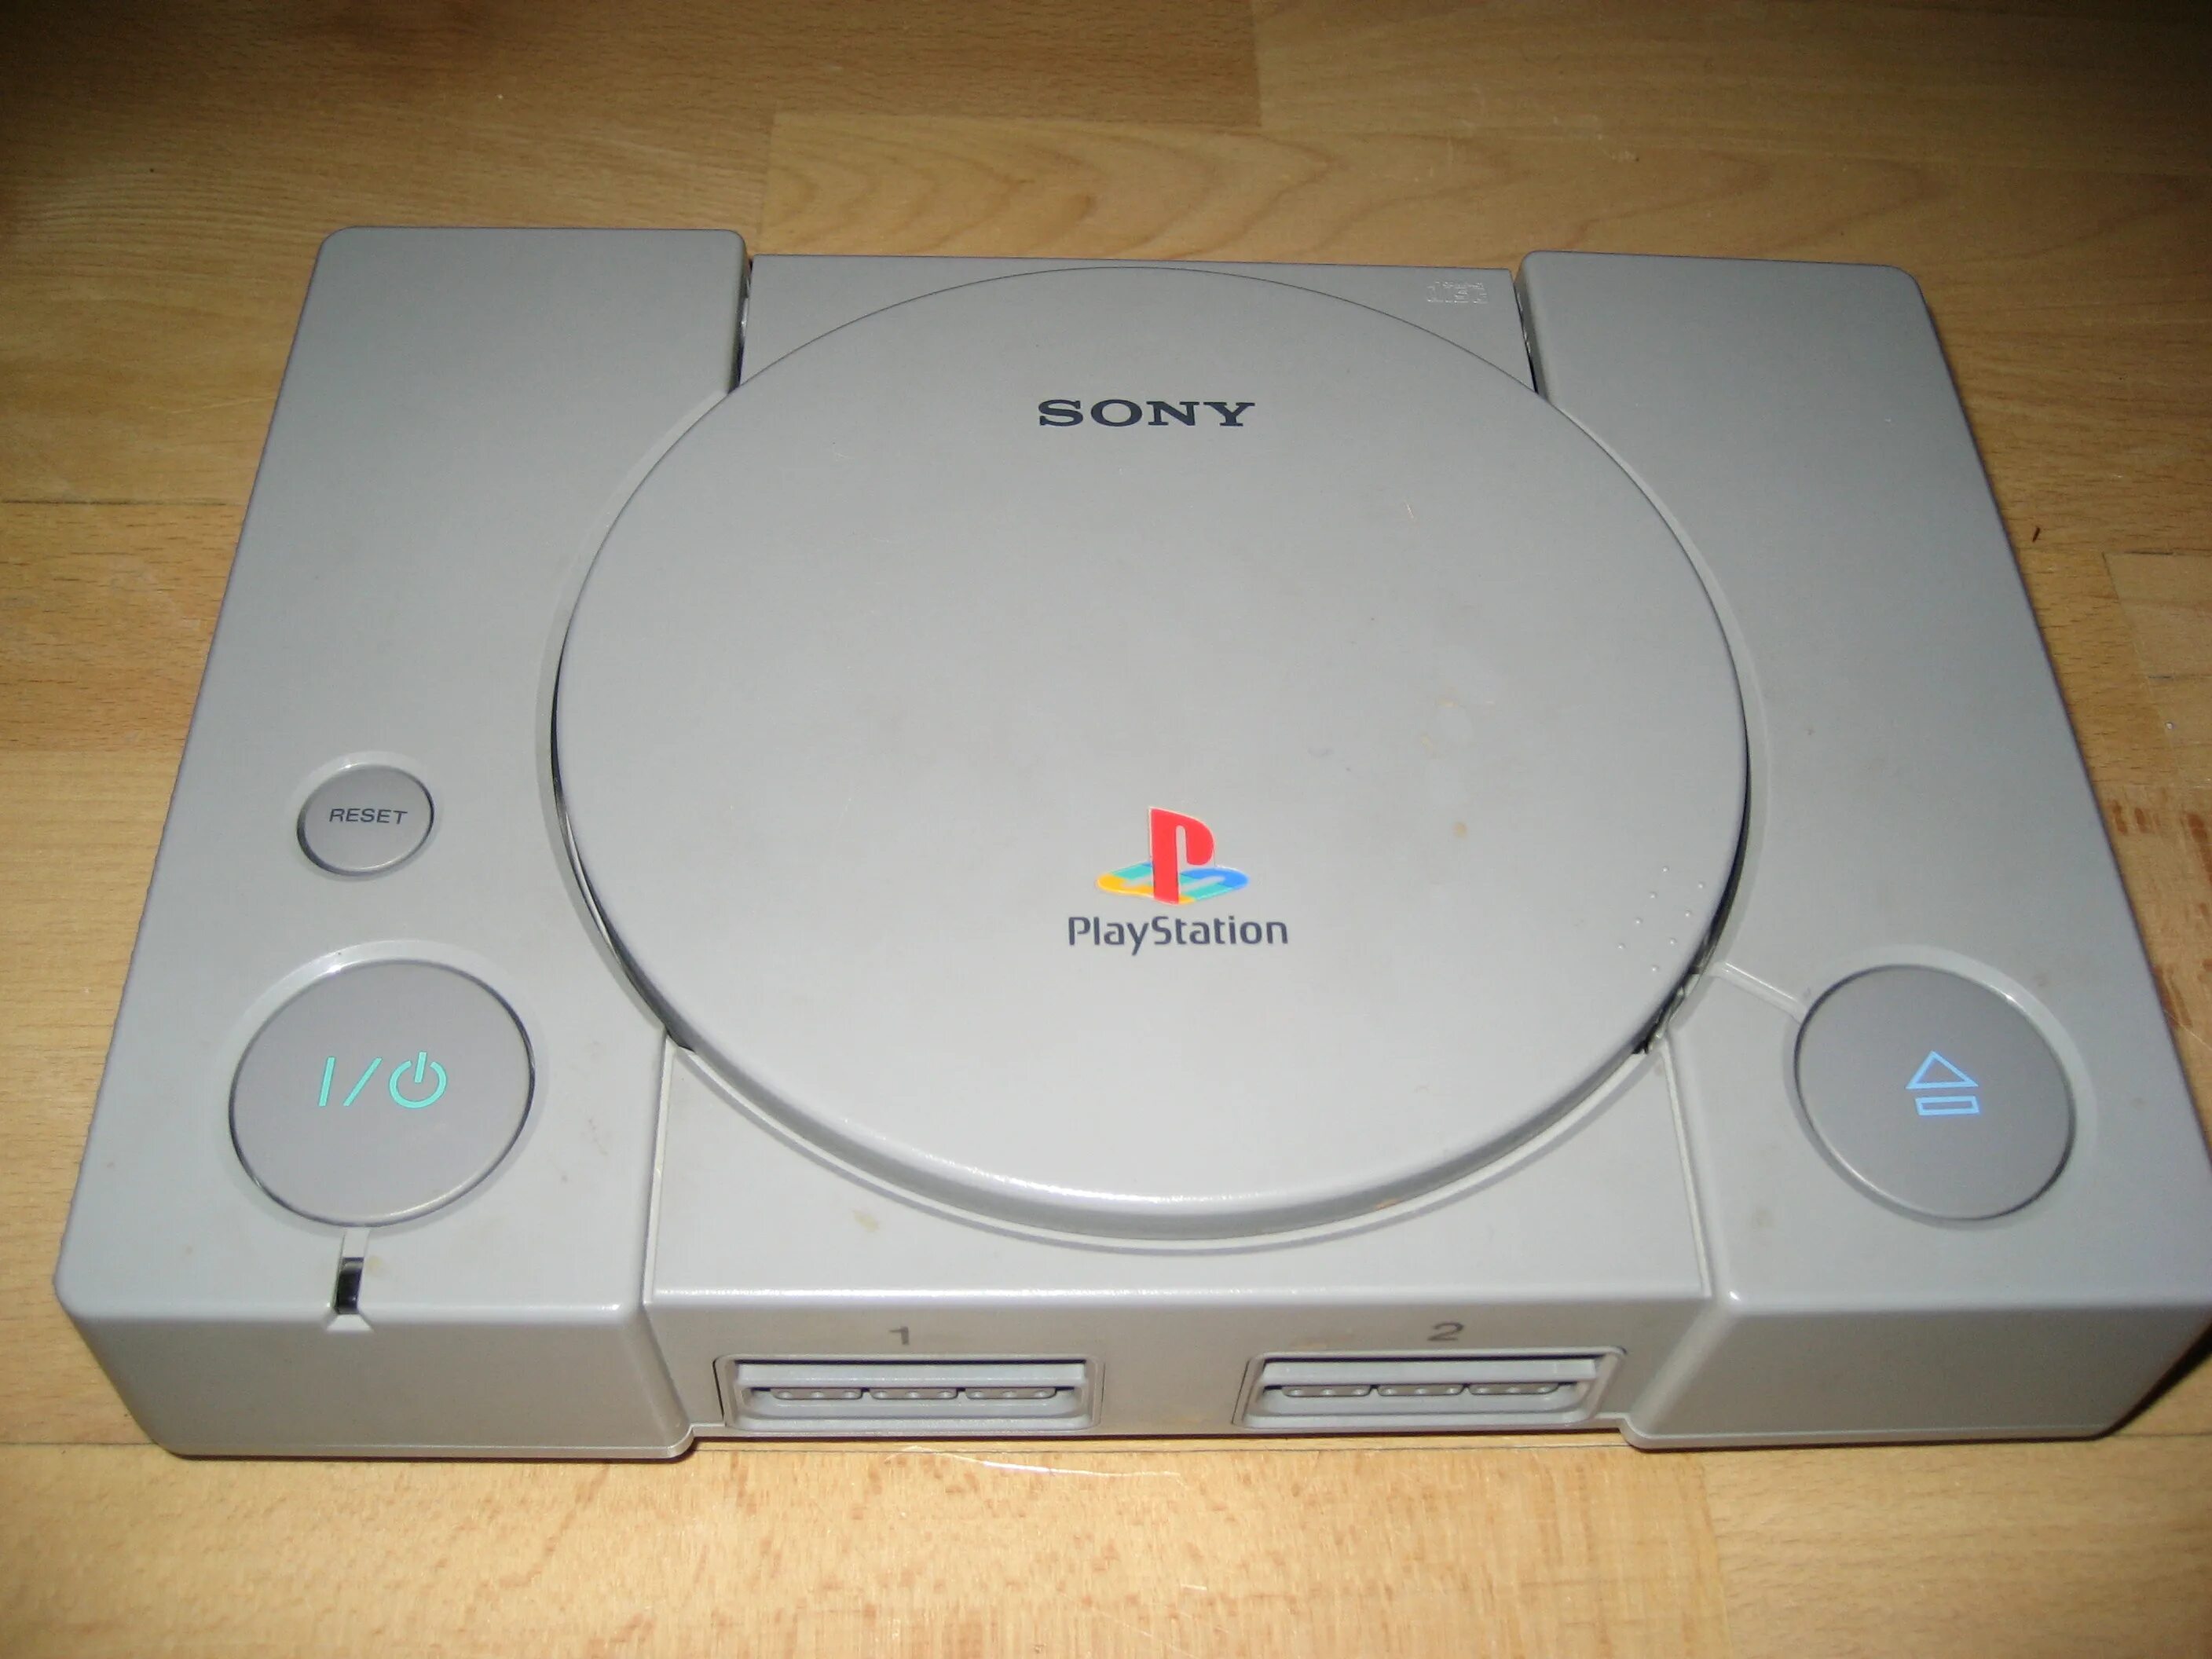 Playstation ps1. Sony ps1. Sony PLAYSTATION 1 1995. Сони плейстейшен 1 фат. Приставка Sony ps1.